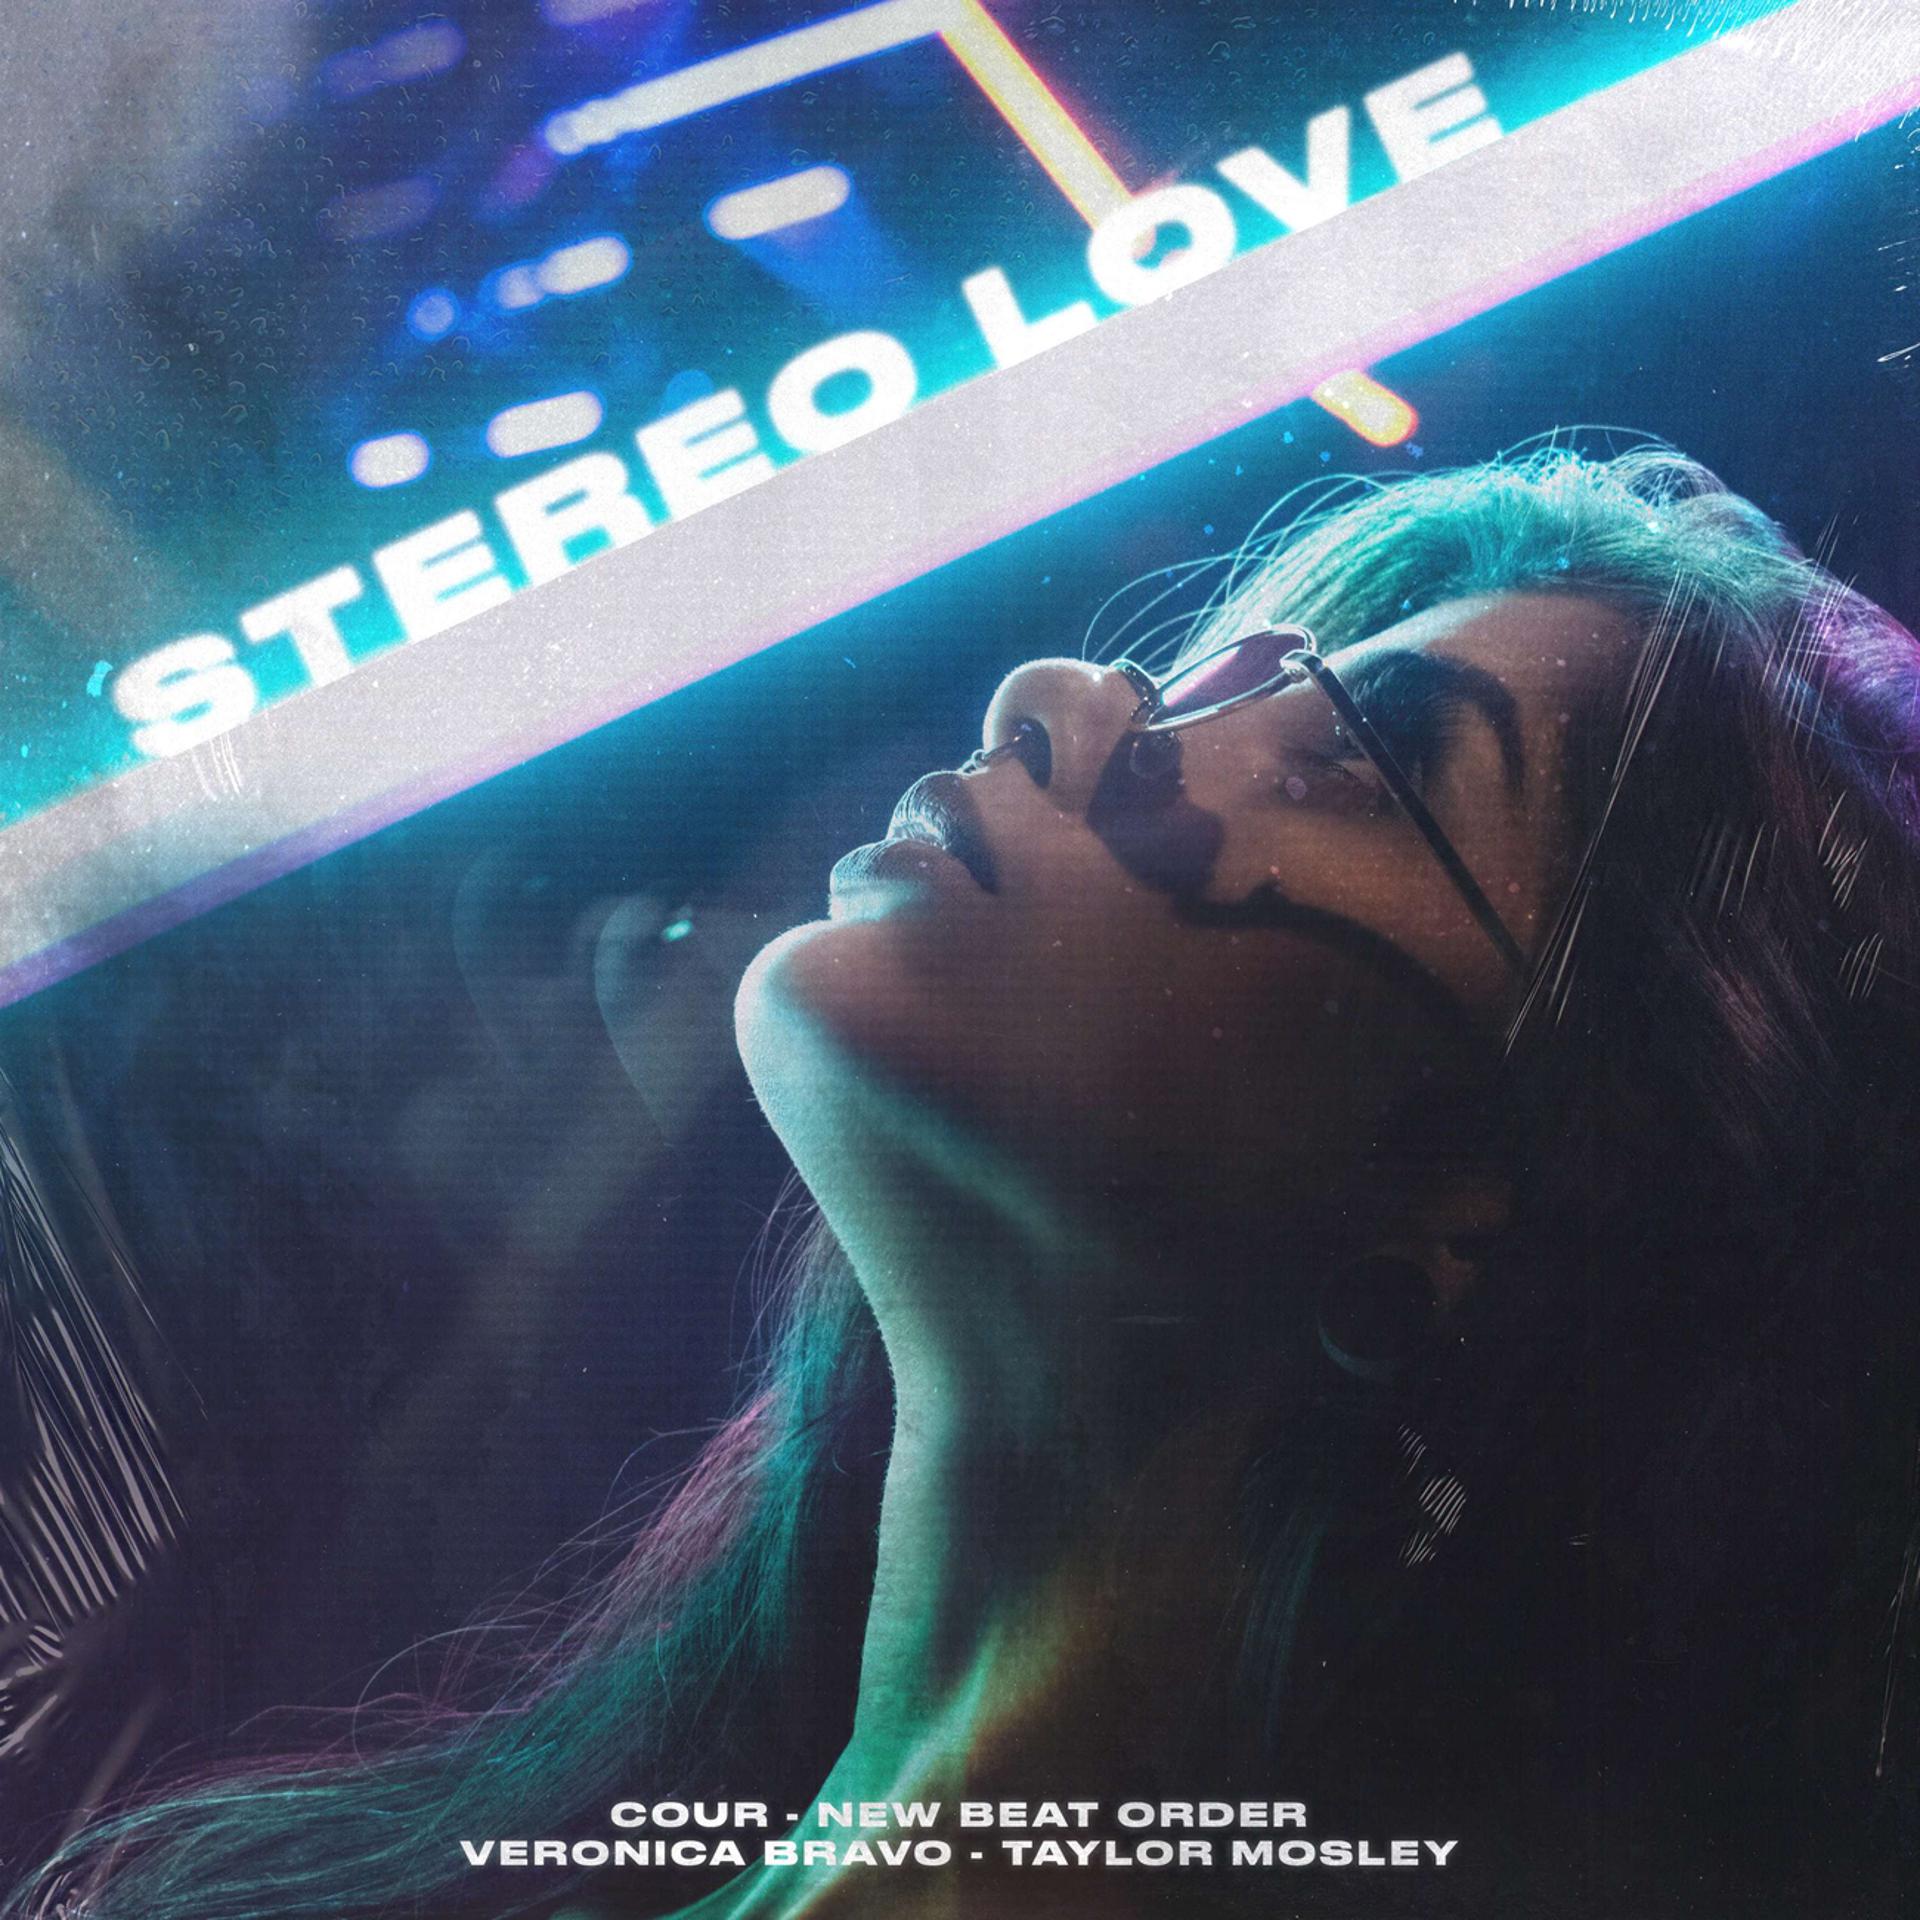 Постер альбома Stereo Love